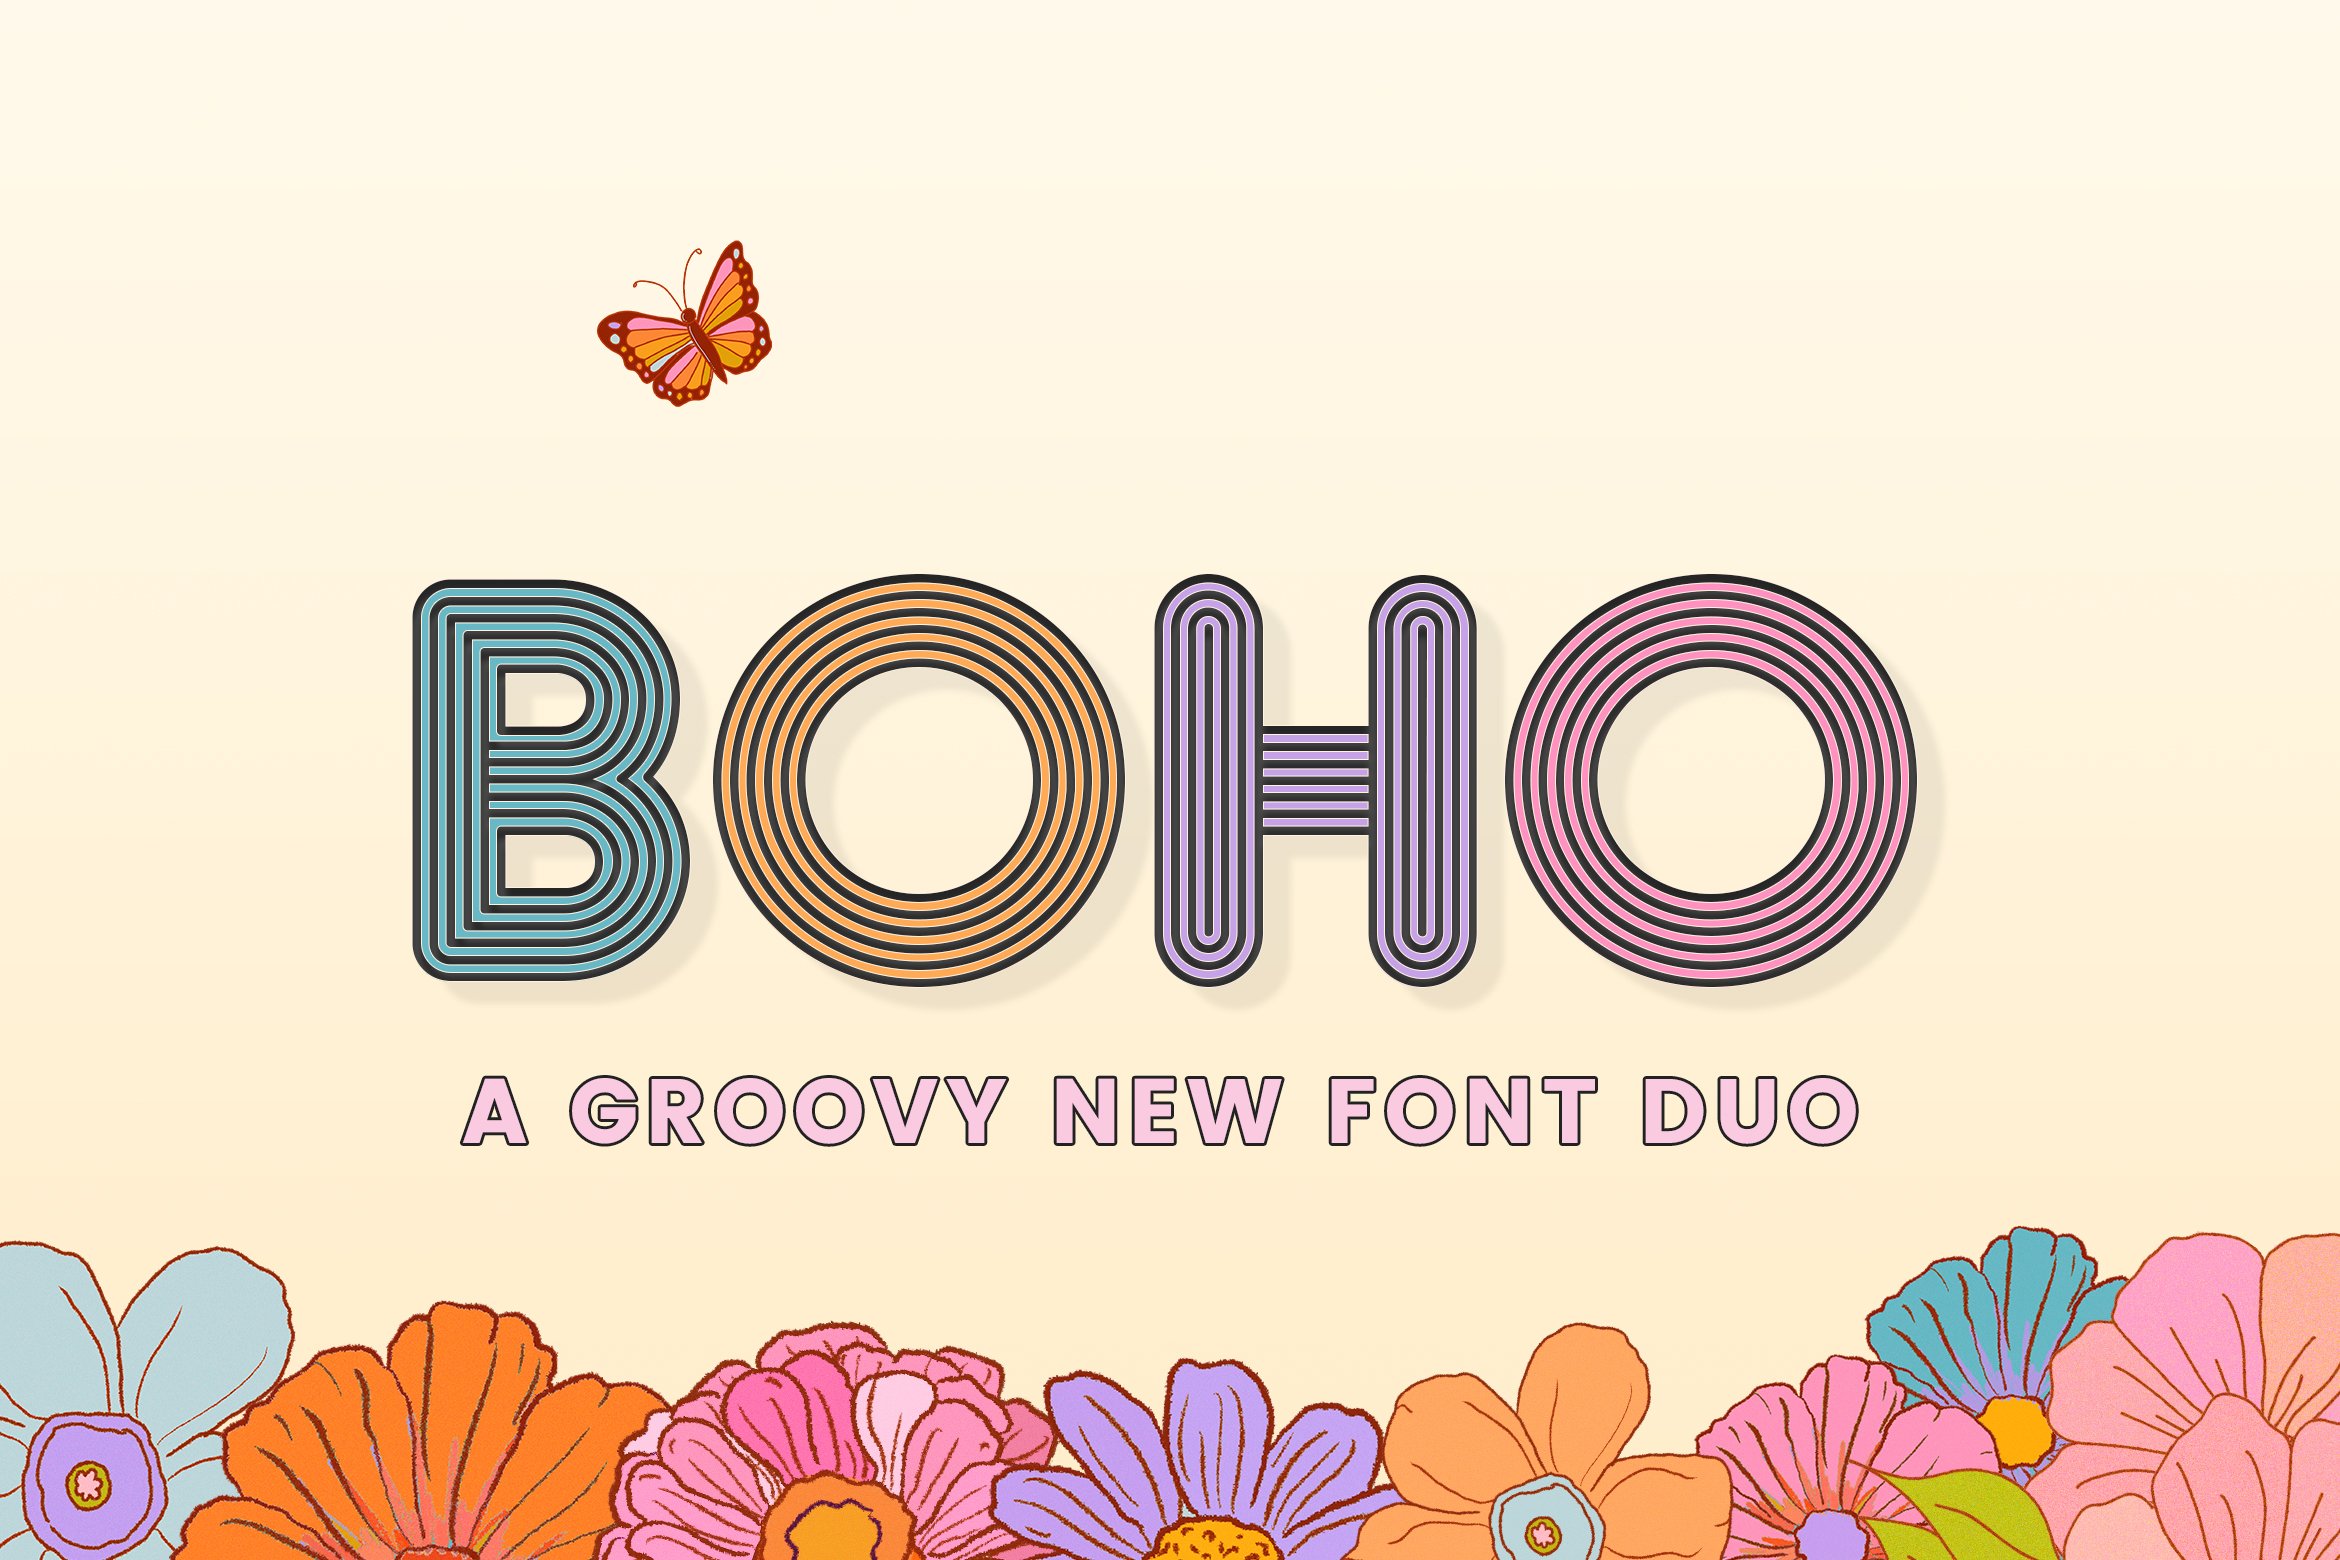 Boho Font Duo cover image.